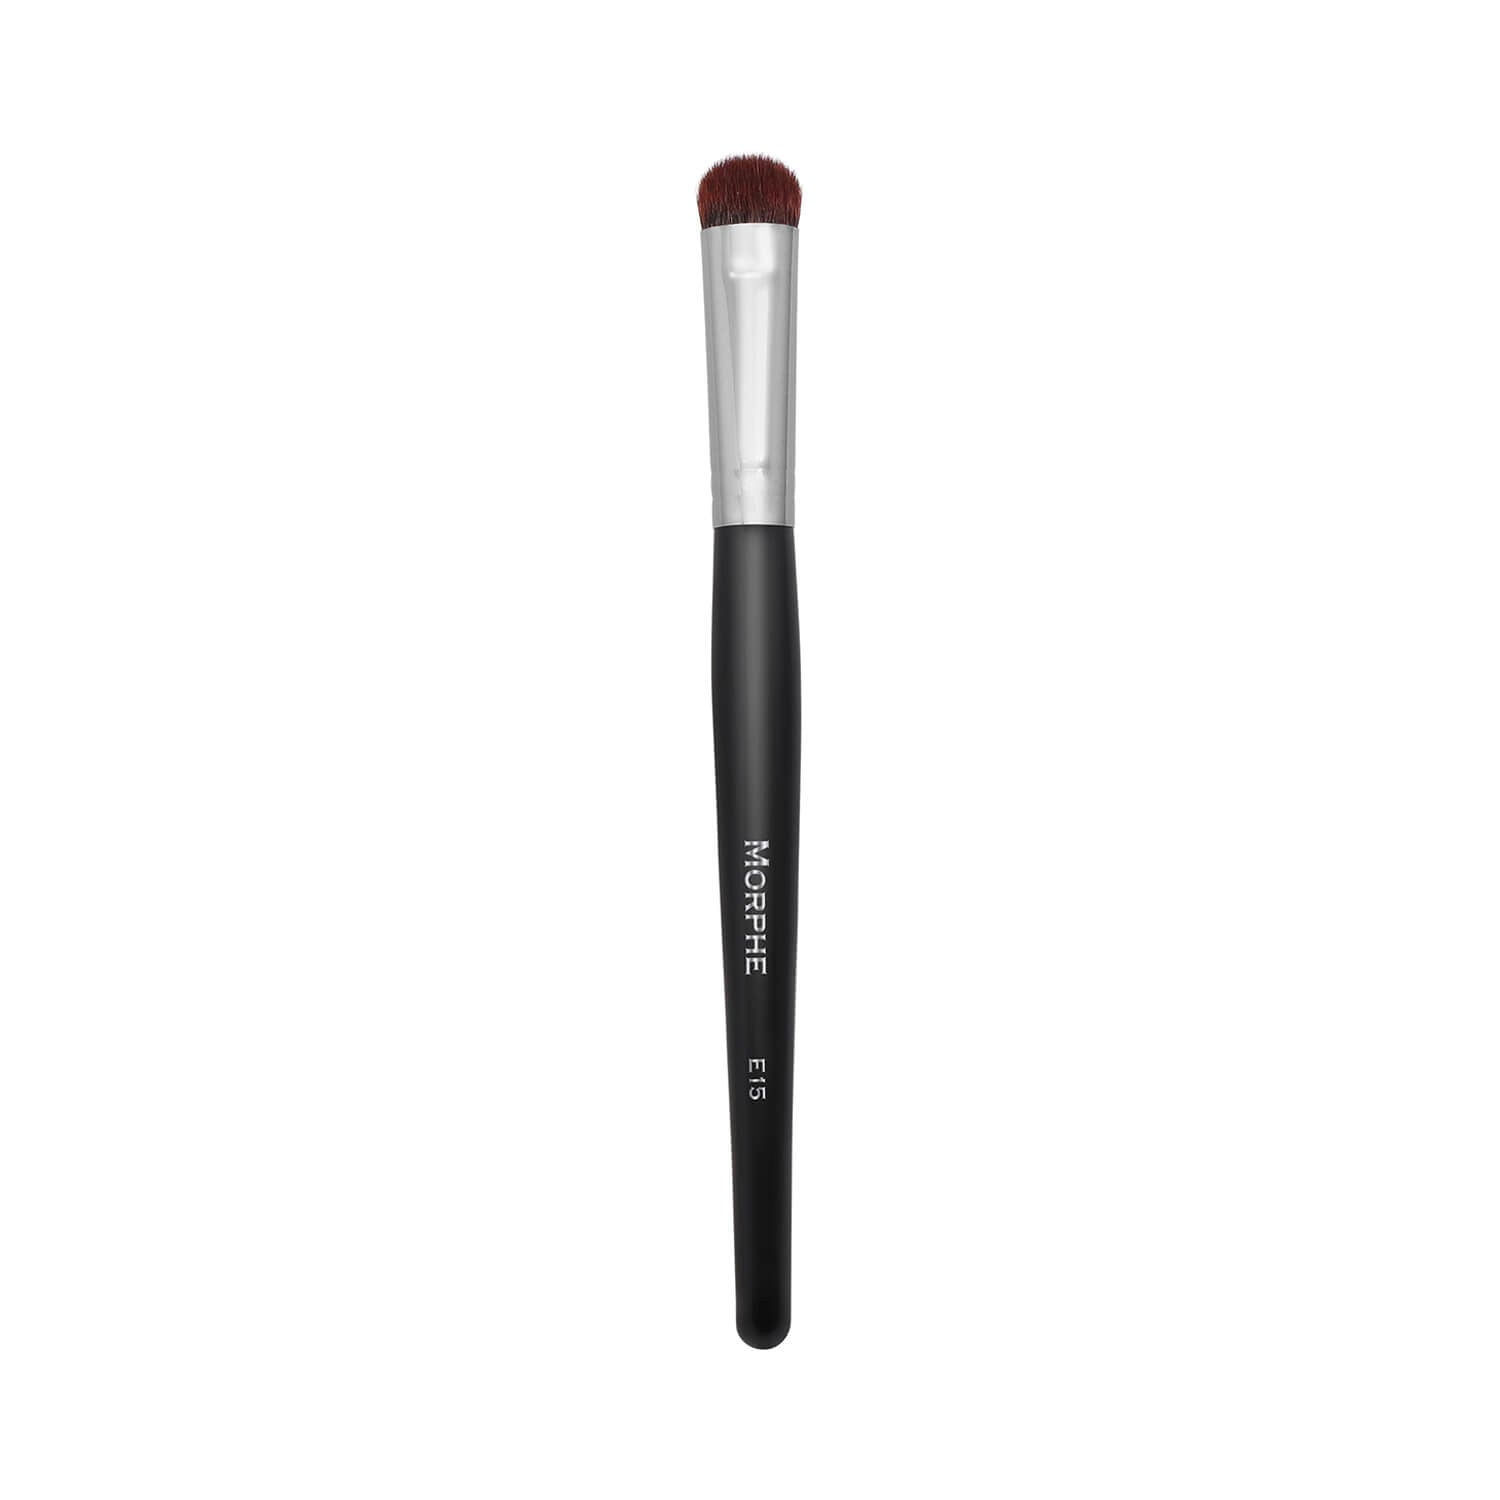 Morphe Cosmetics E15 Deluxe Oval Shadow Brush